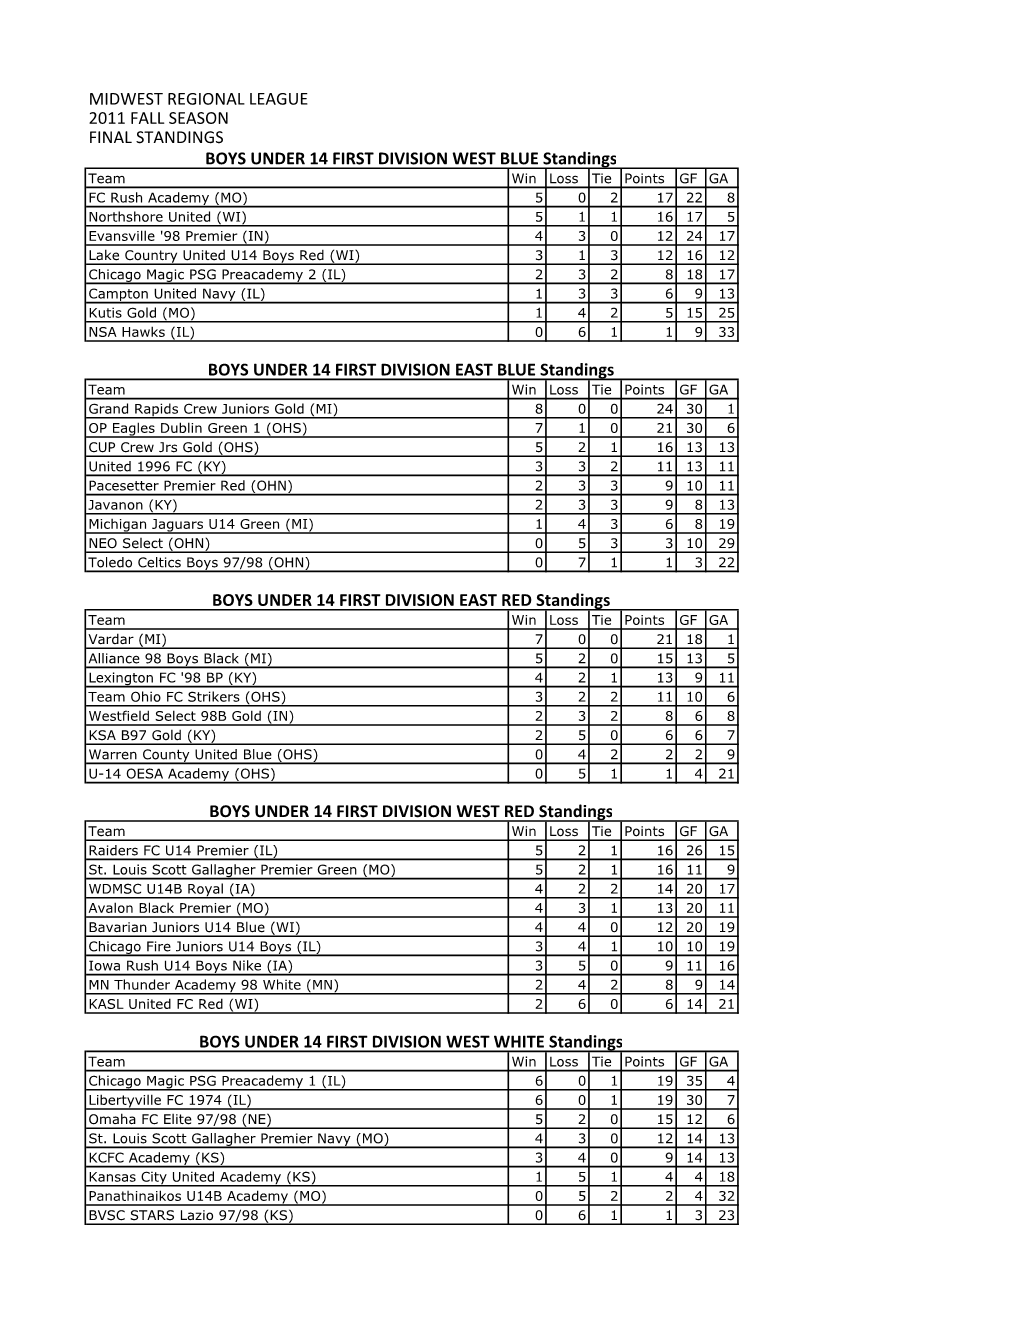 Final Standings 2011 Fall Season 1-22-12